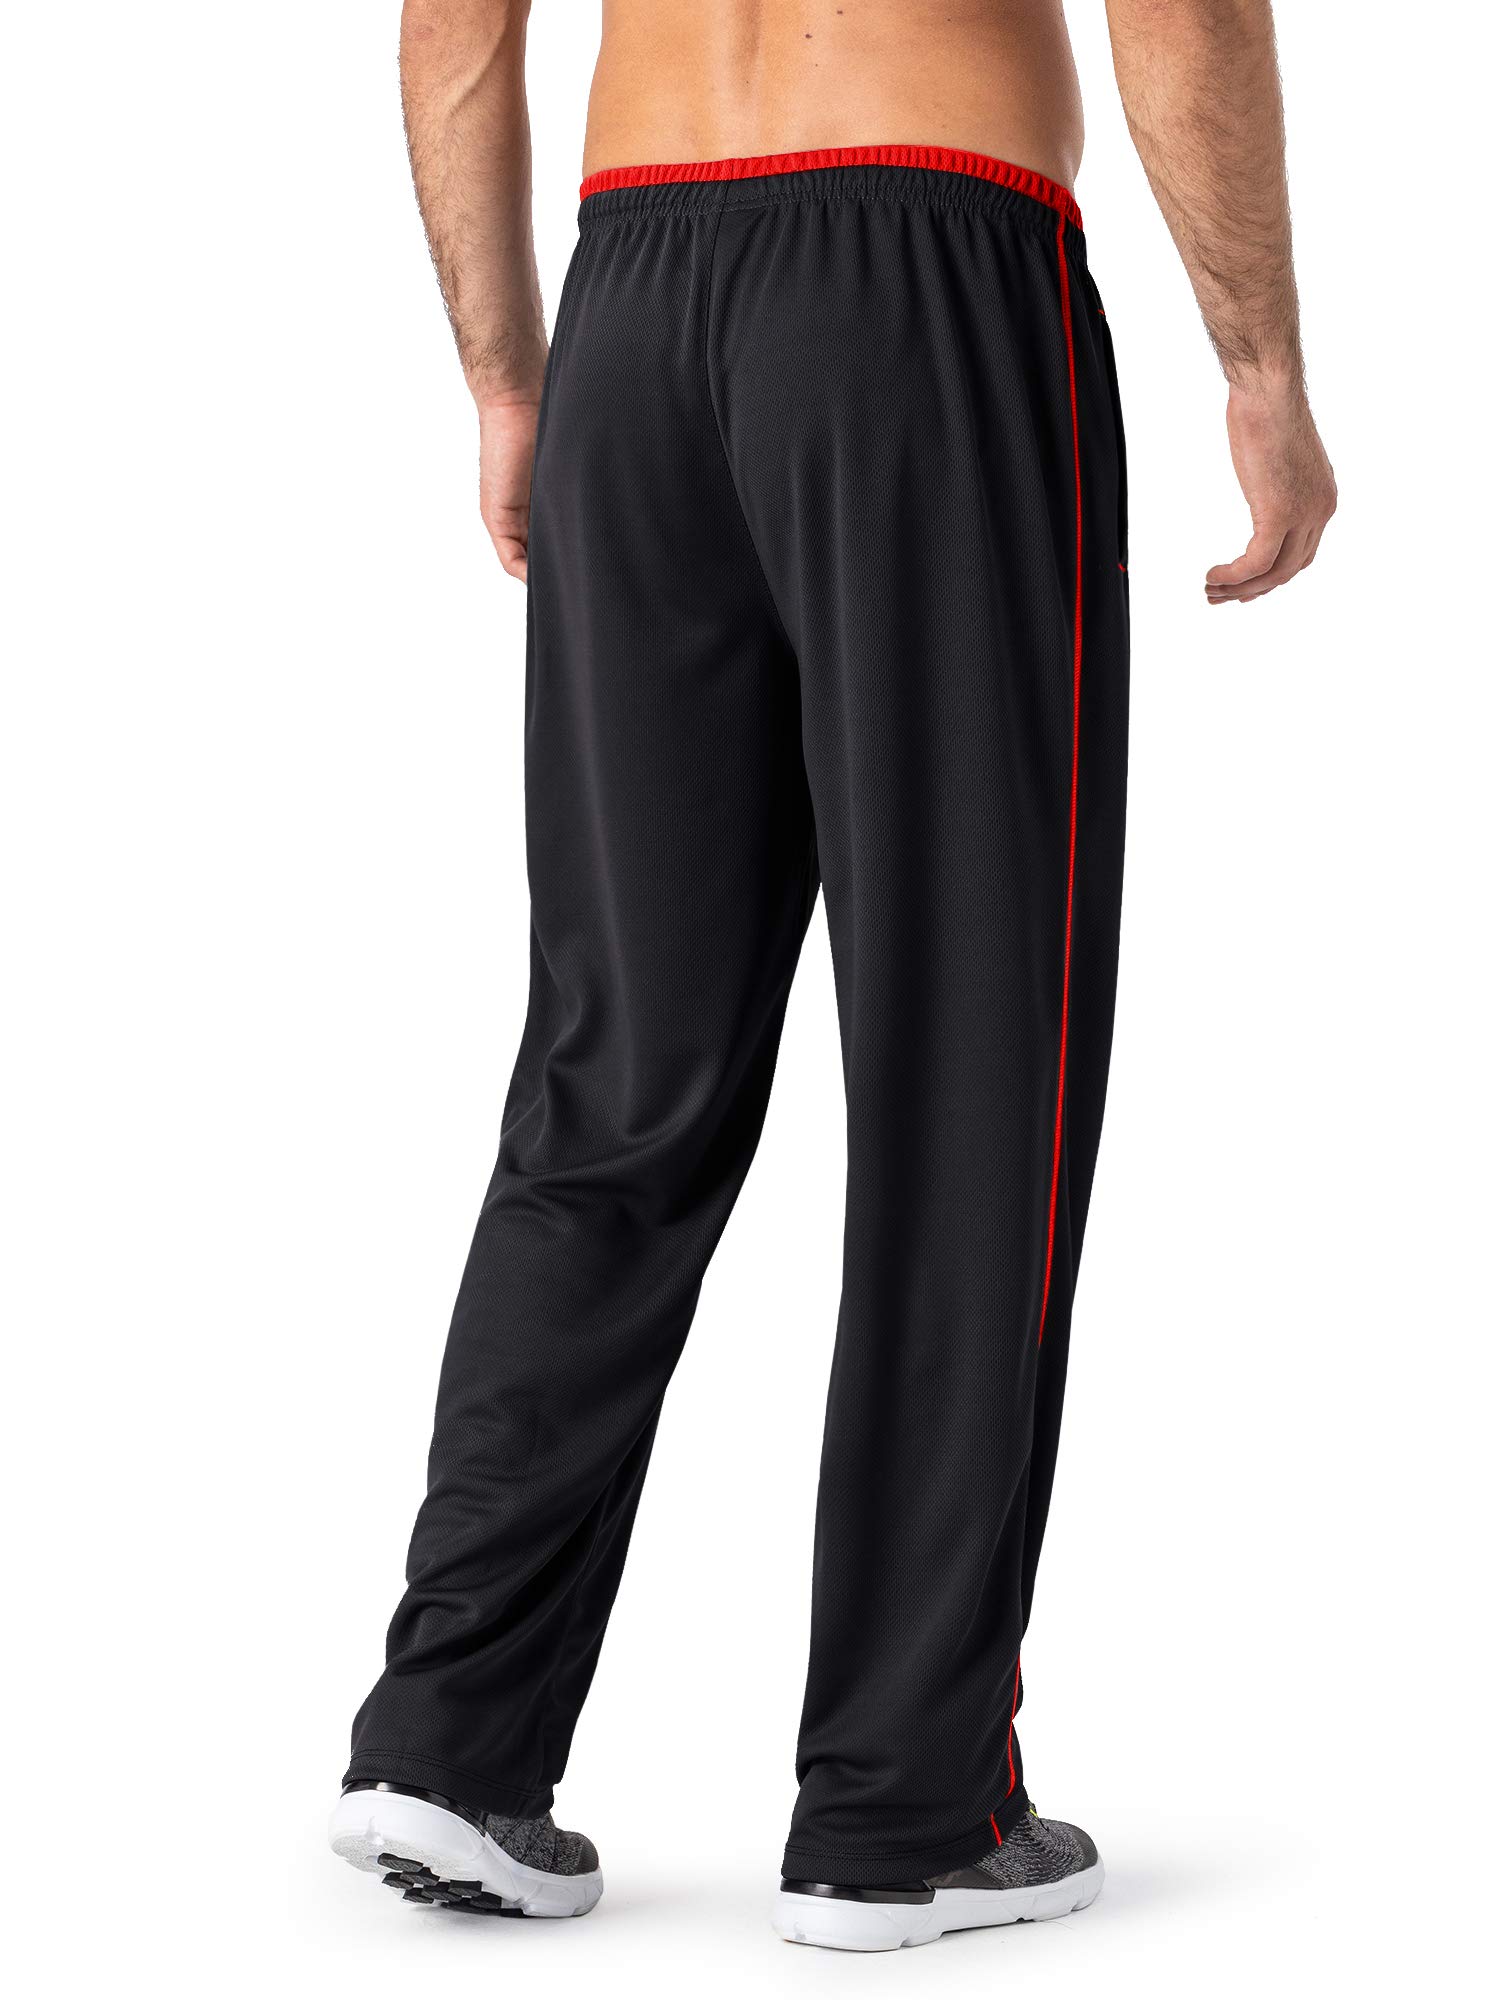 MAGNIVIT Sport Pants for Men Loose fit Warm Up Baggy Sweatpants with Zipper Pockets Black/Red